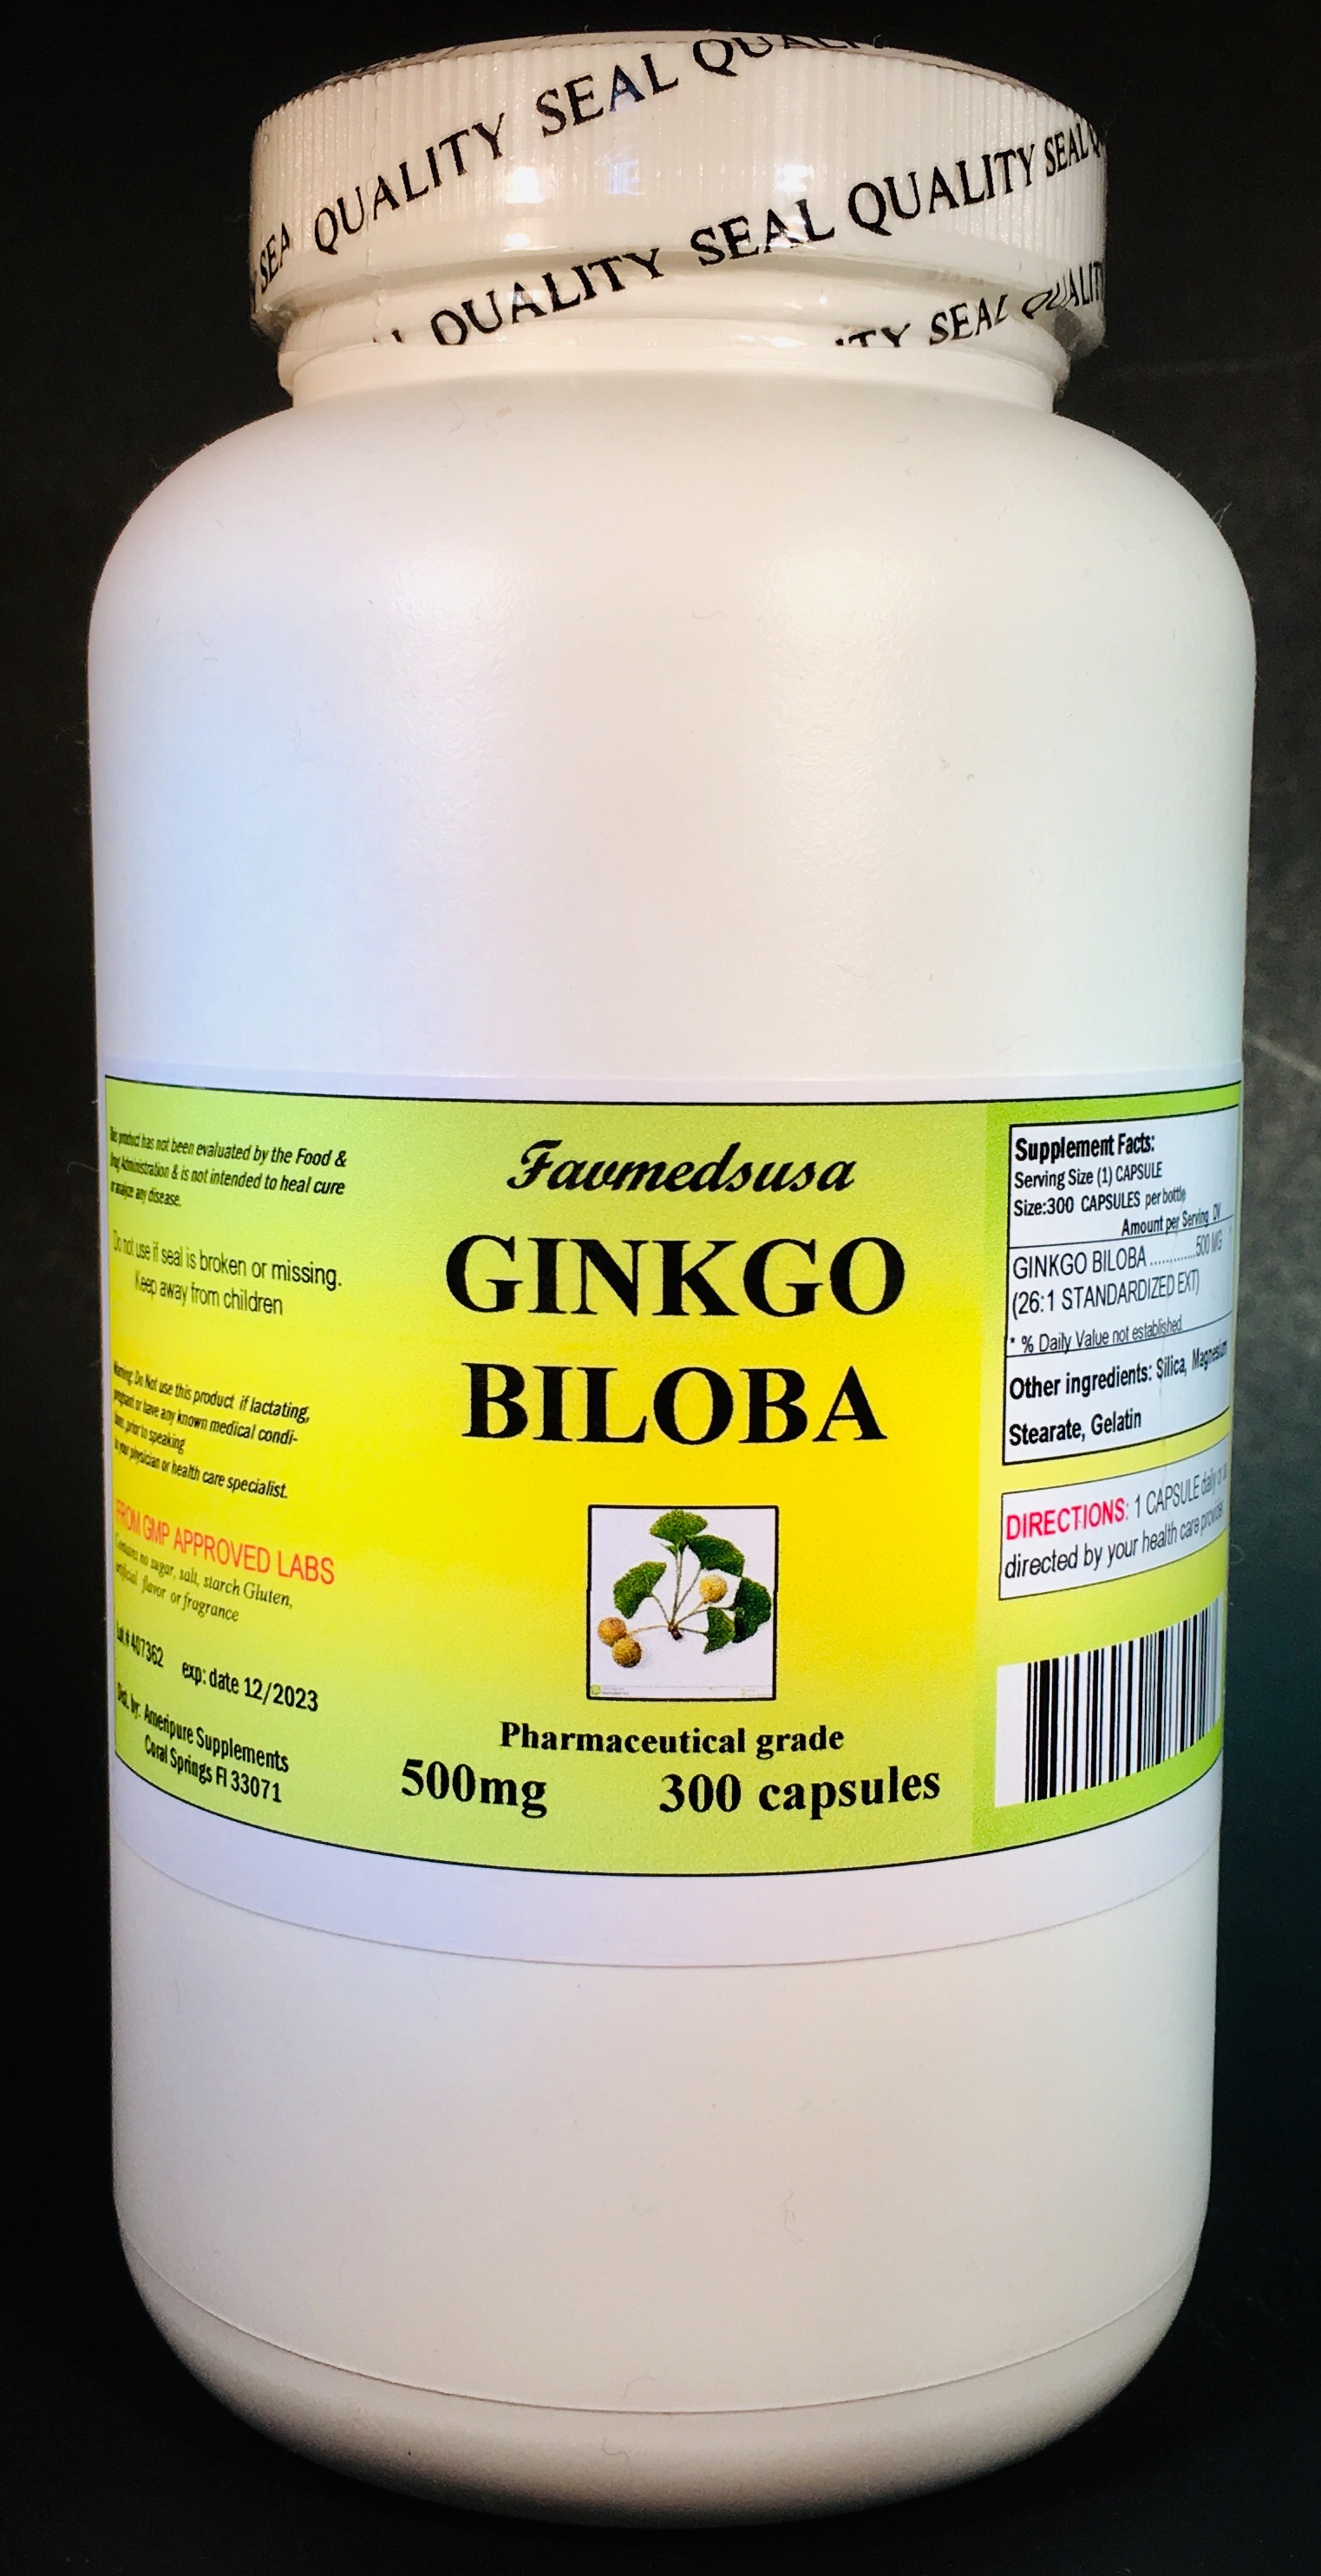 Ginkgo Biloba 500mg - 300 capsules